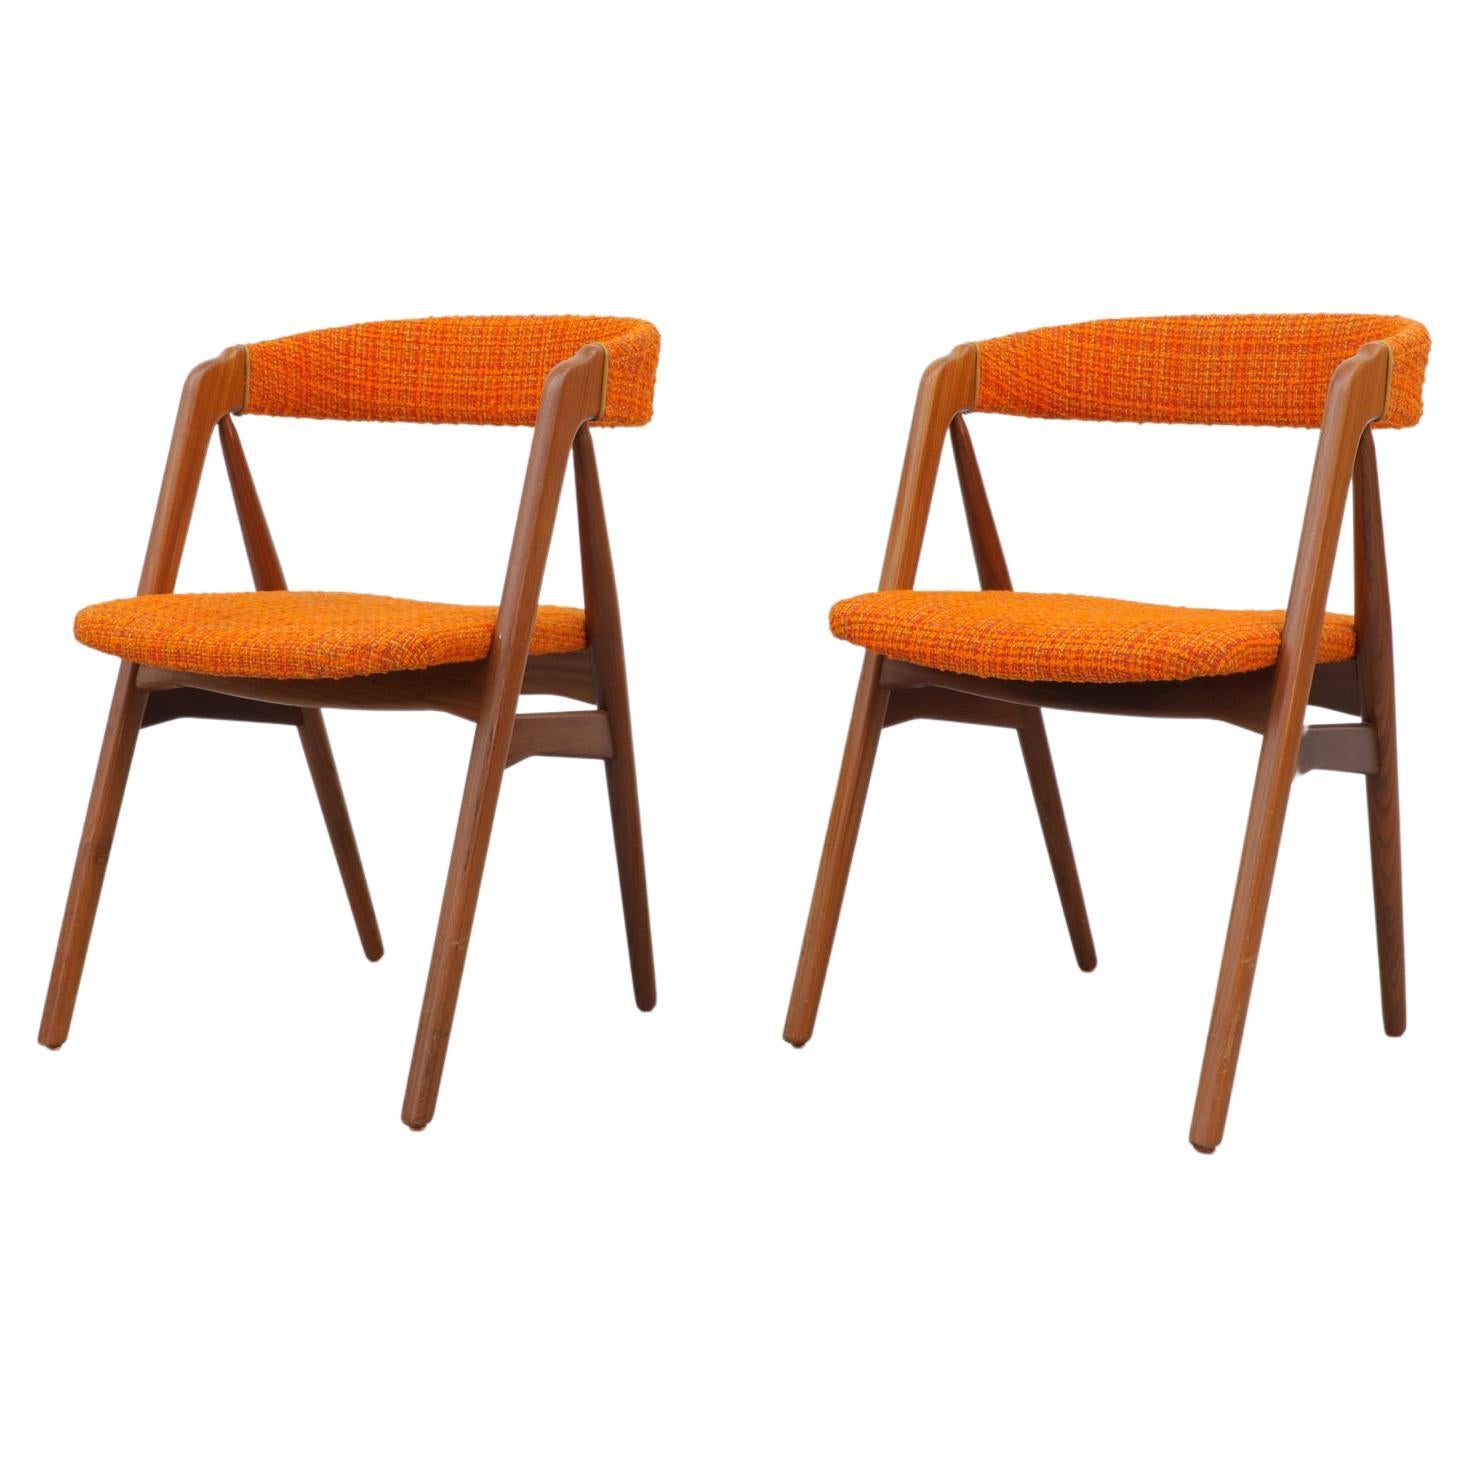 Pair of Kai Kristiansen Chairs with Original Orange Upholstered Seats